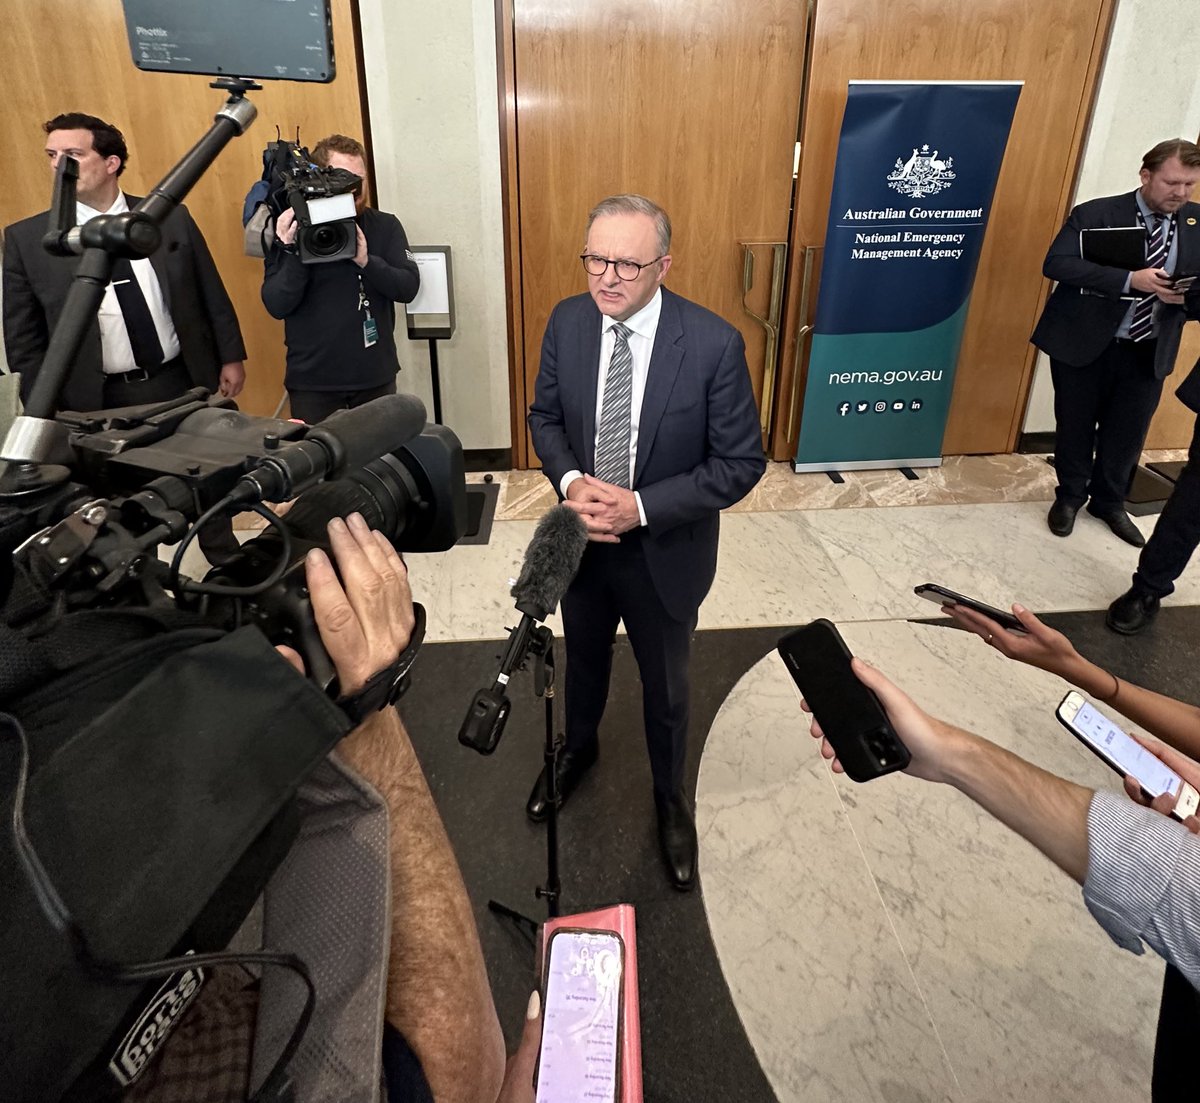 PM @AlboMP pays tribute to outgoing Victorian Premier Daniel Andrews. “Daniel’s career has been quite extraordinary.” @9NewsAUS #auspol